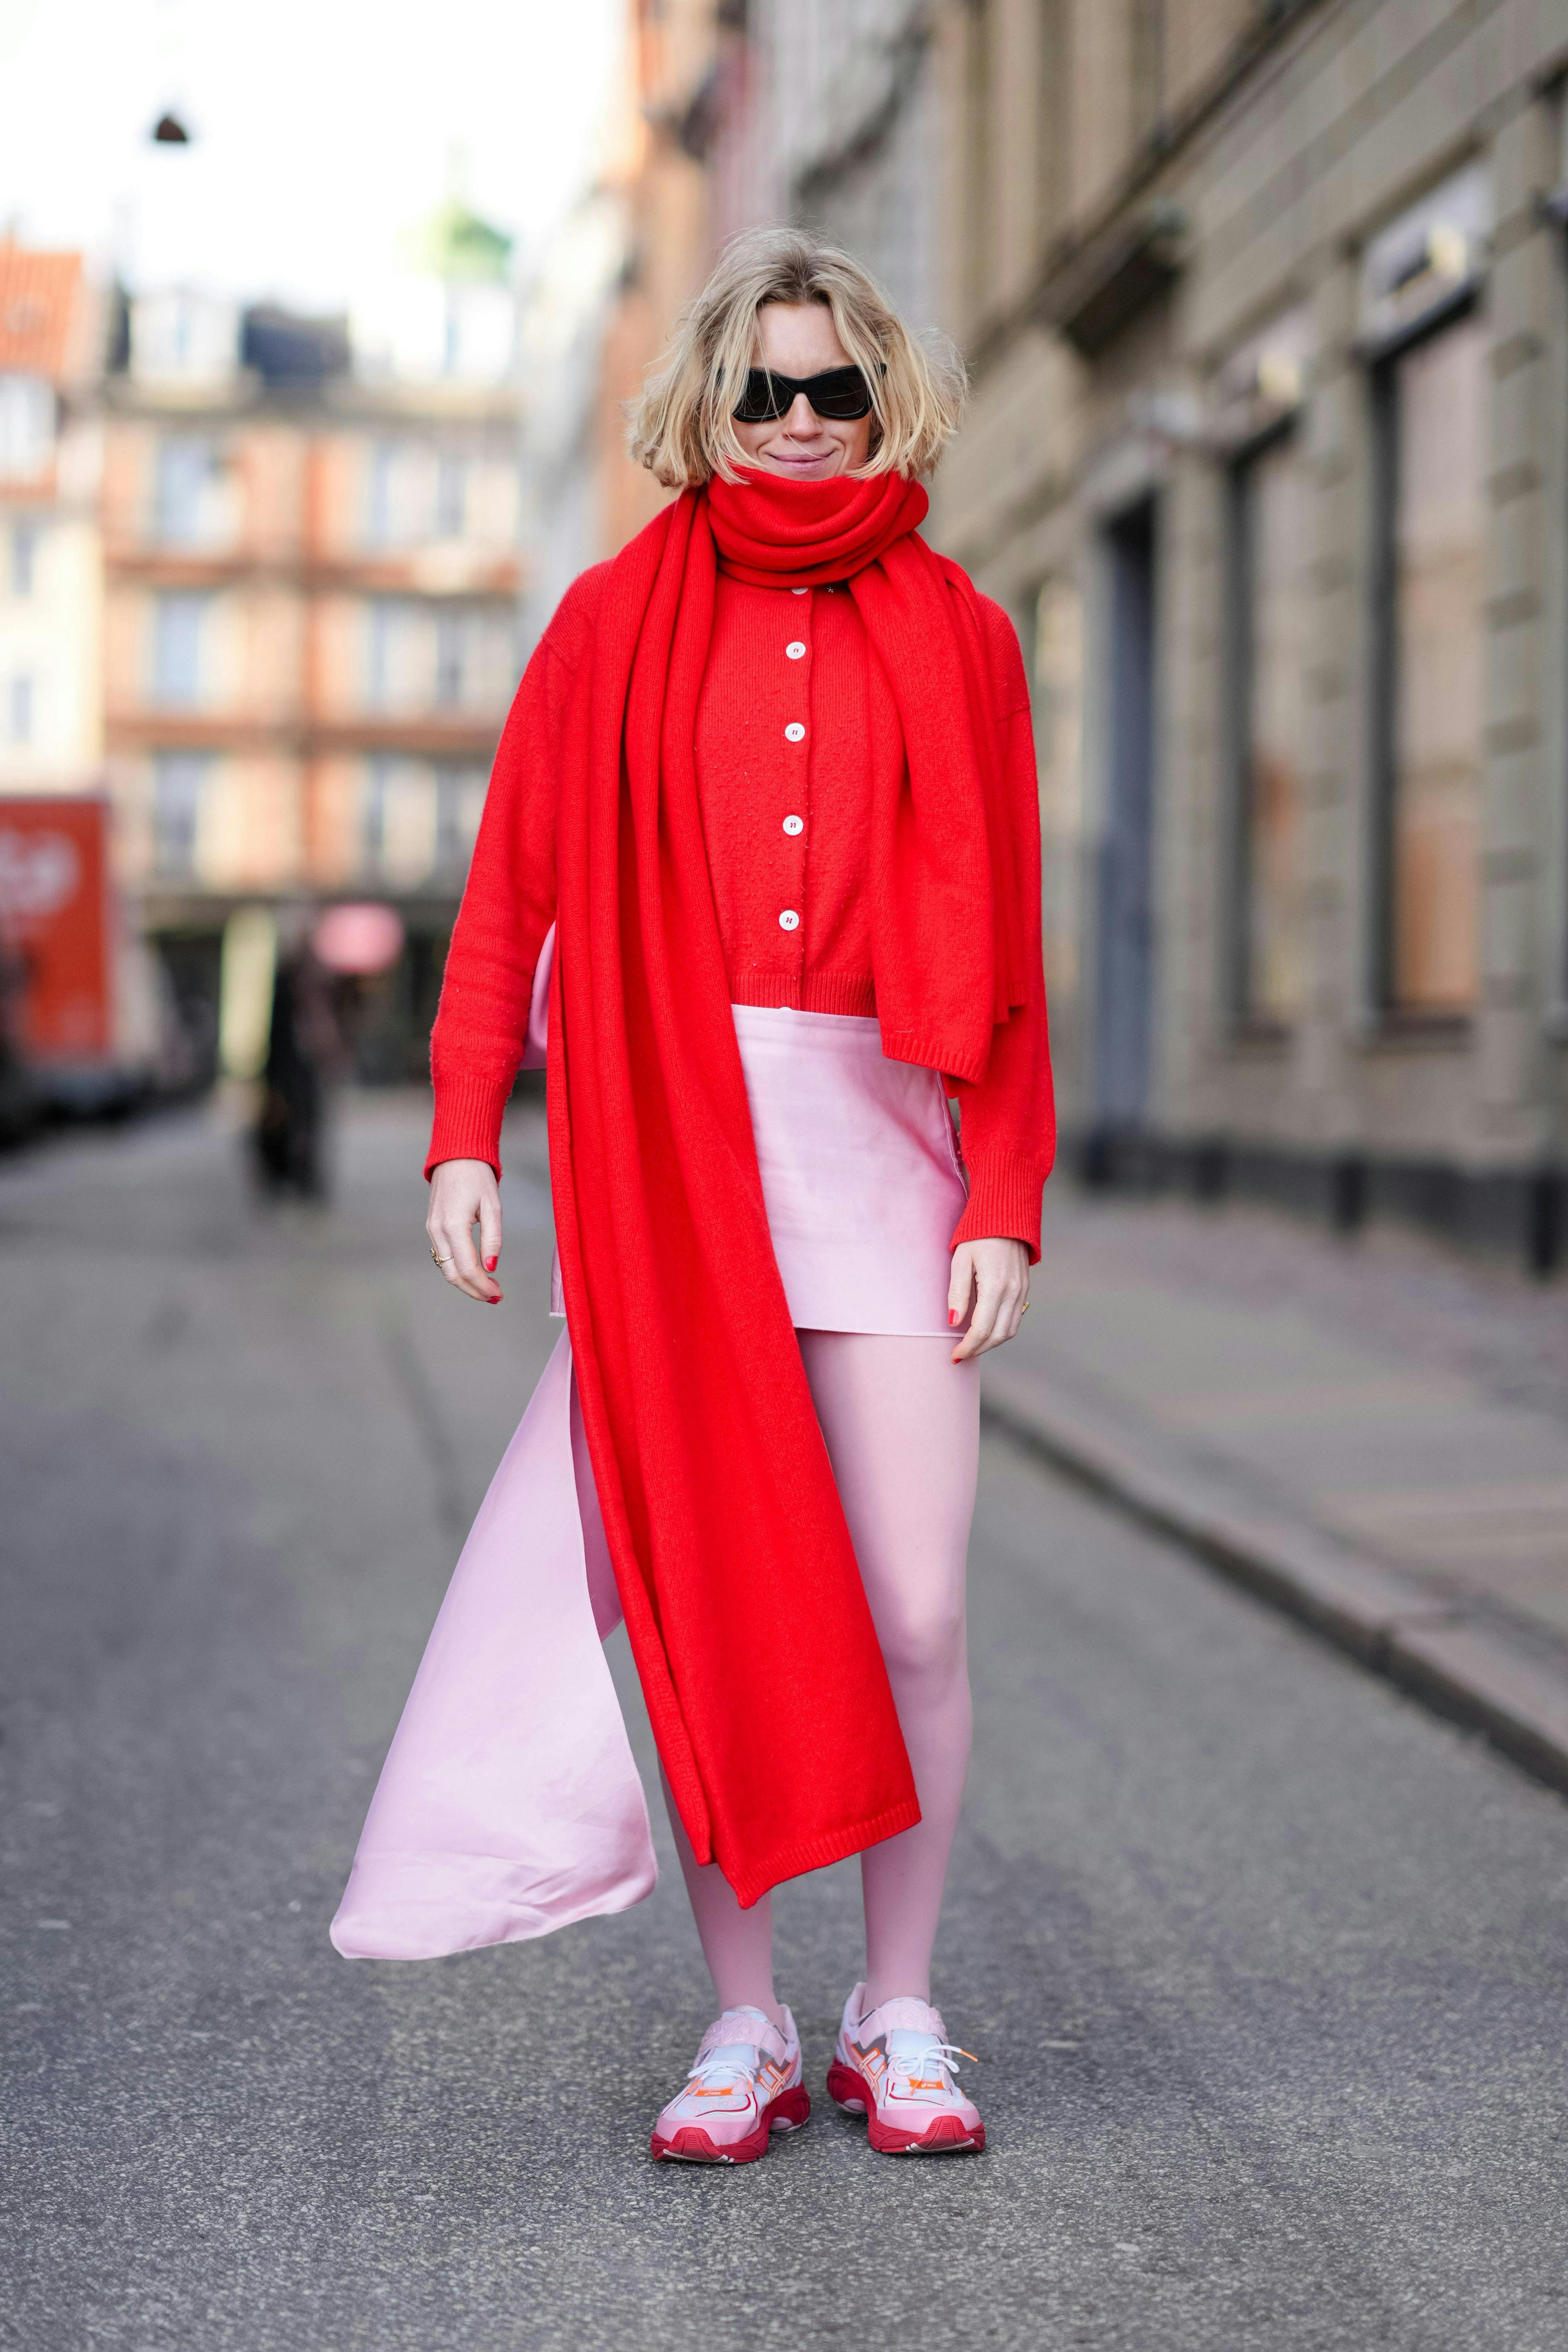 style cold cold weather woman copenhagen clothing coat fashion knitwear sweater dress overcoat footwear shoe